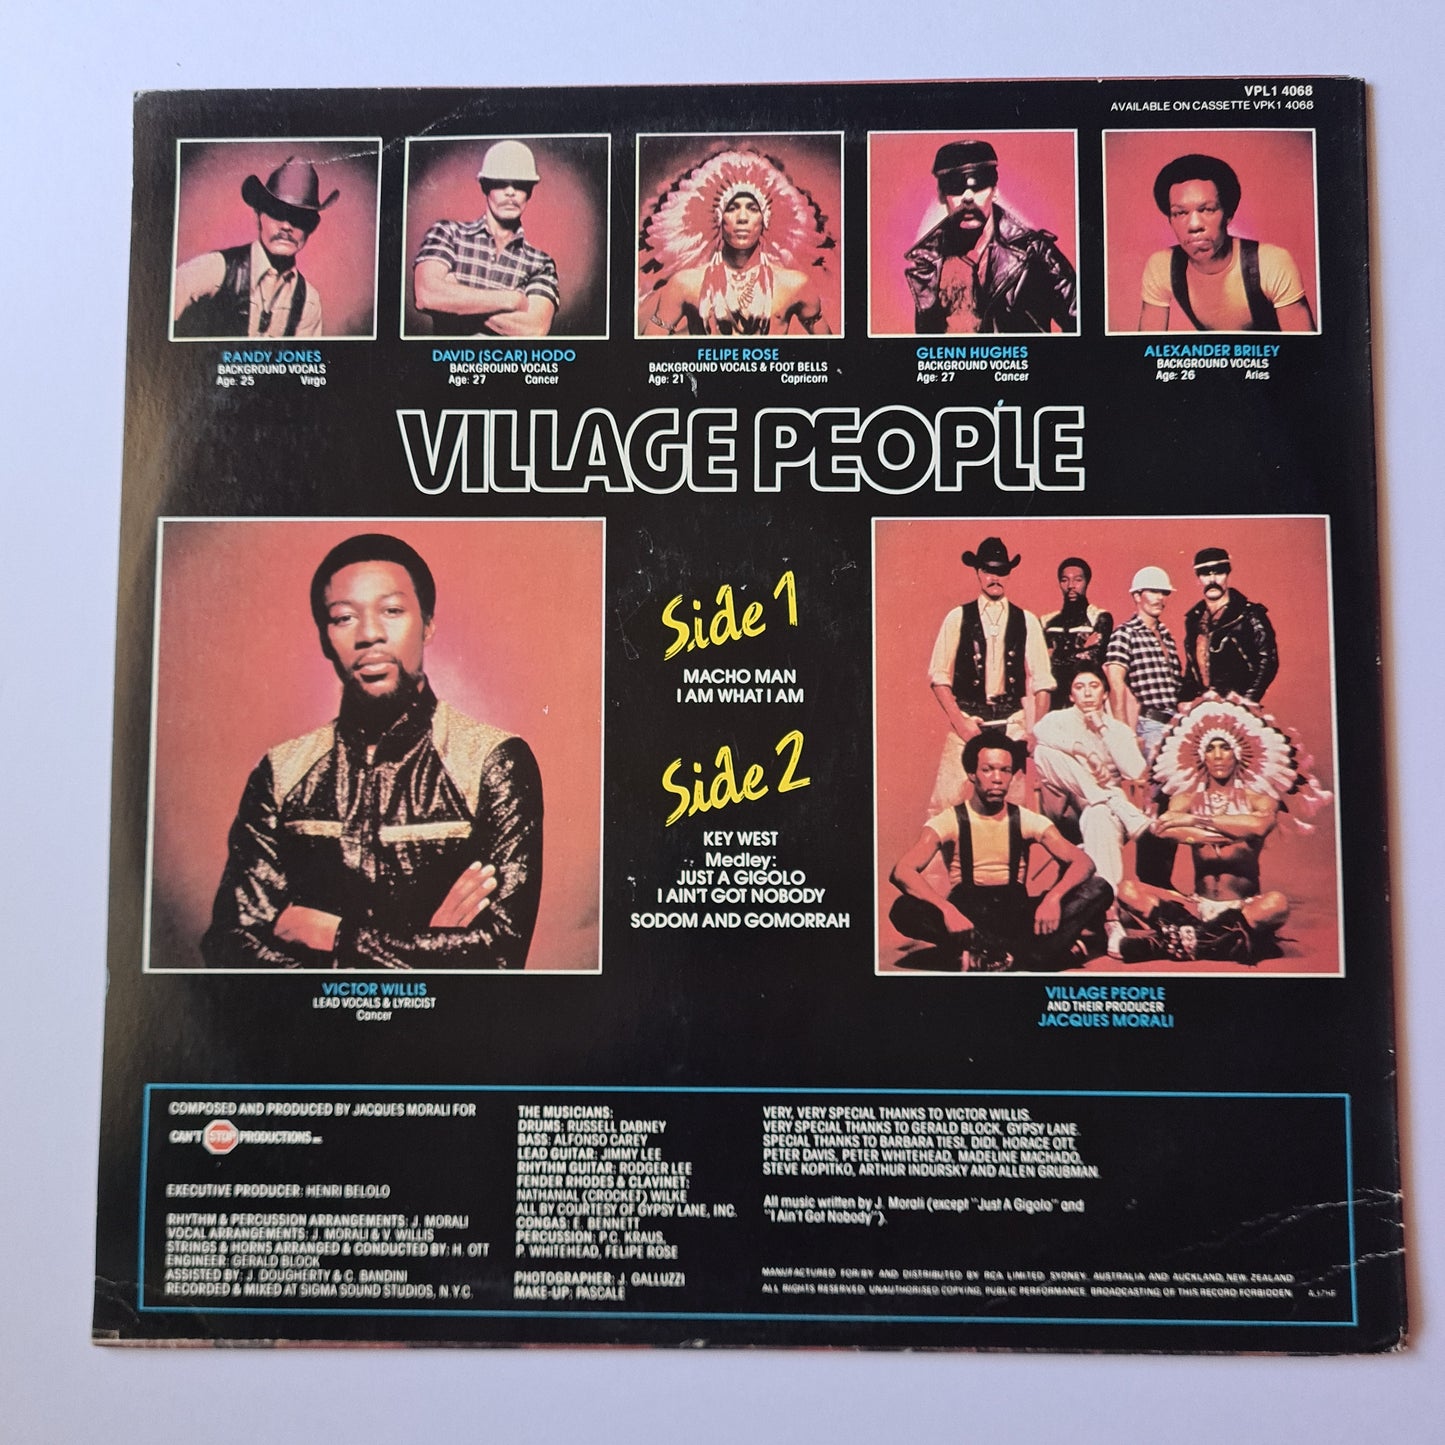 Village People – Macho Man - 1977 - Vinyl Record